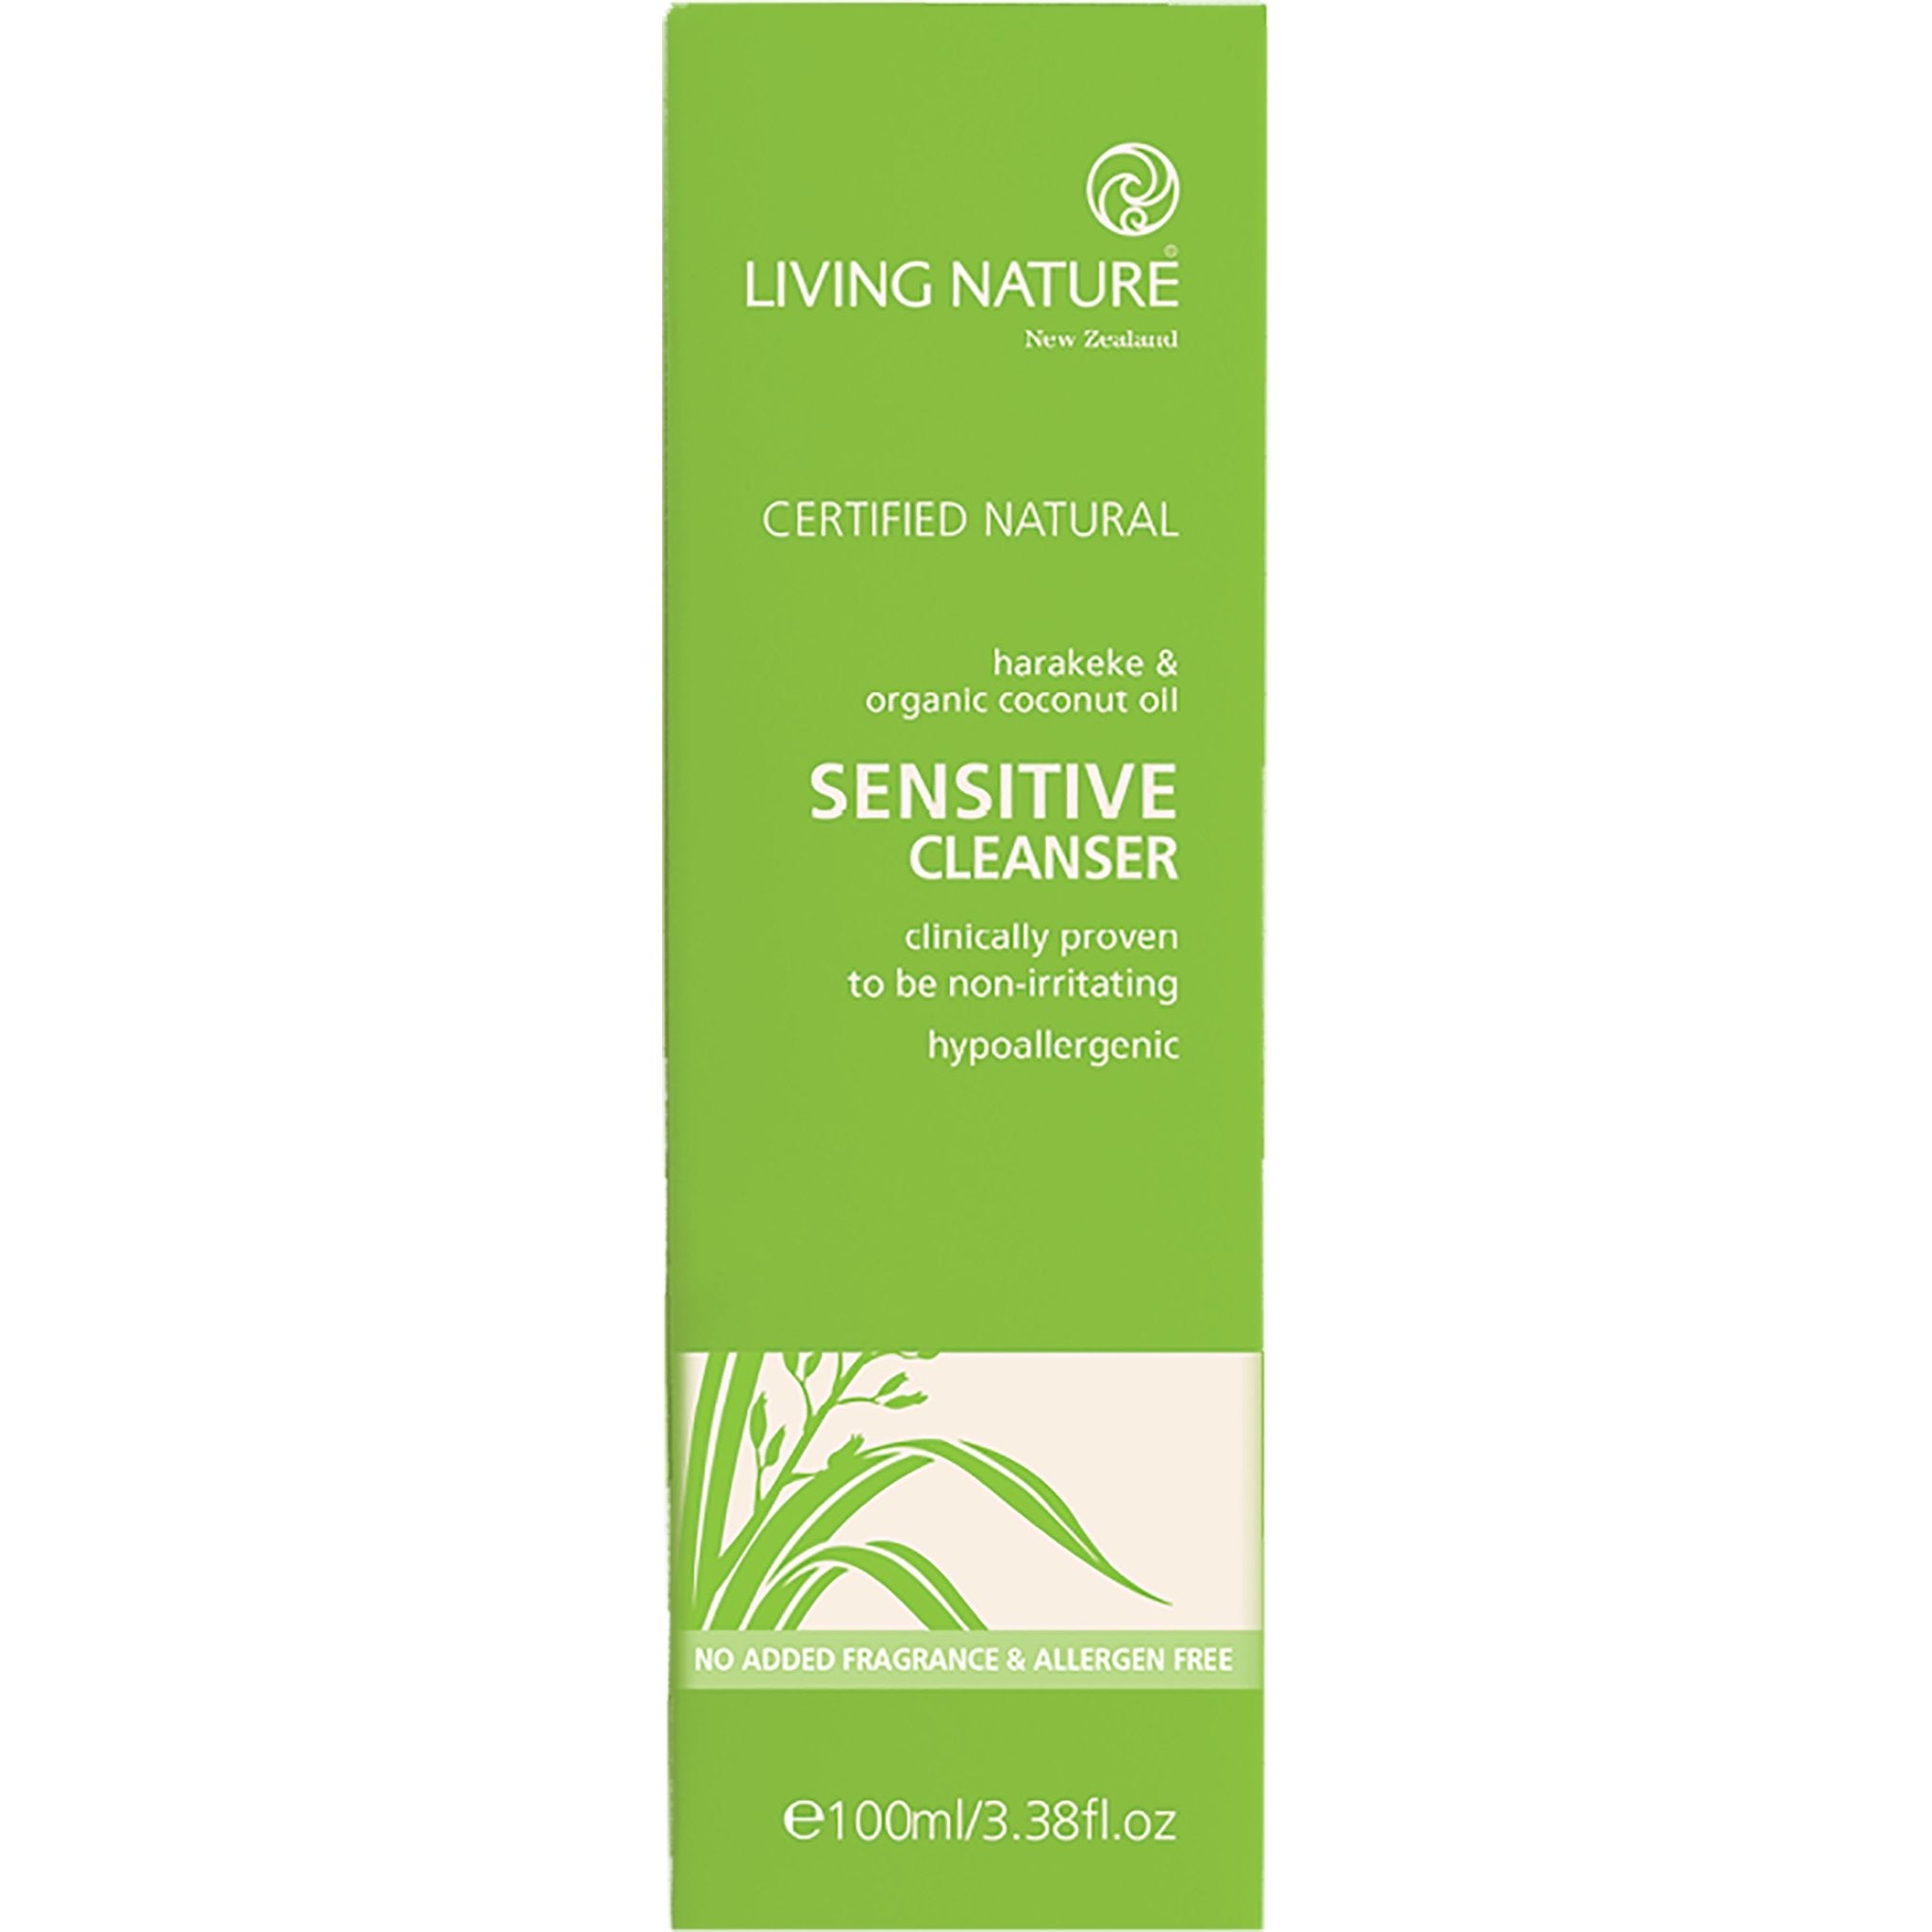 Sensitive Cleanser - mypure.co.uk